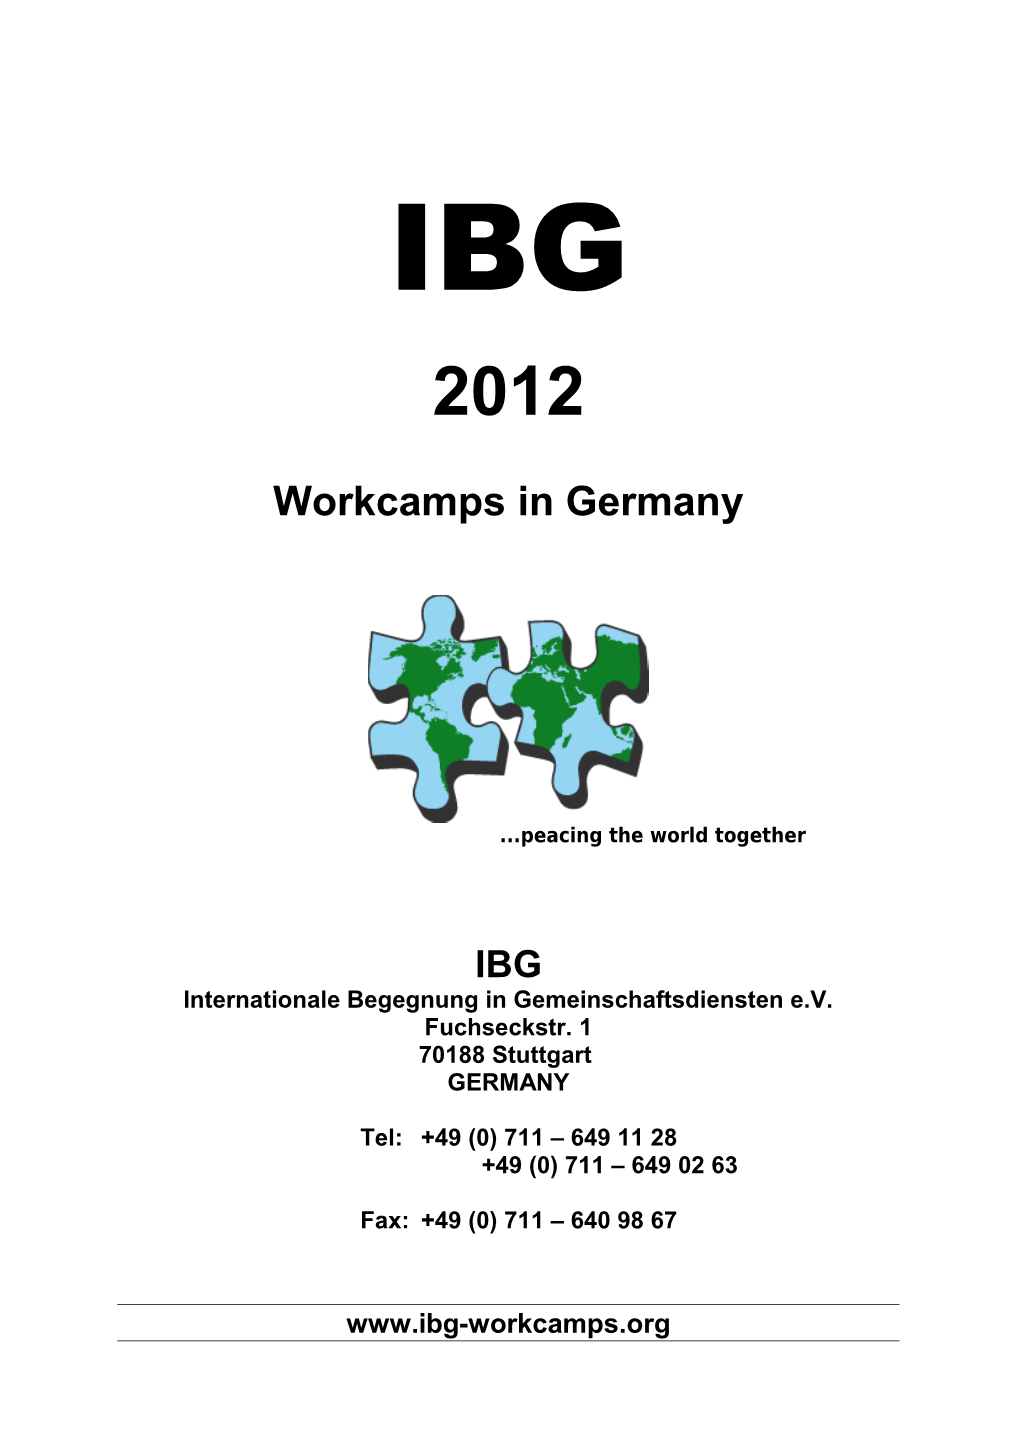 IBG Germany Workcamps 2012